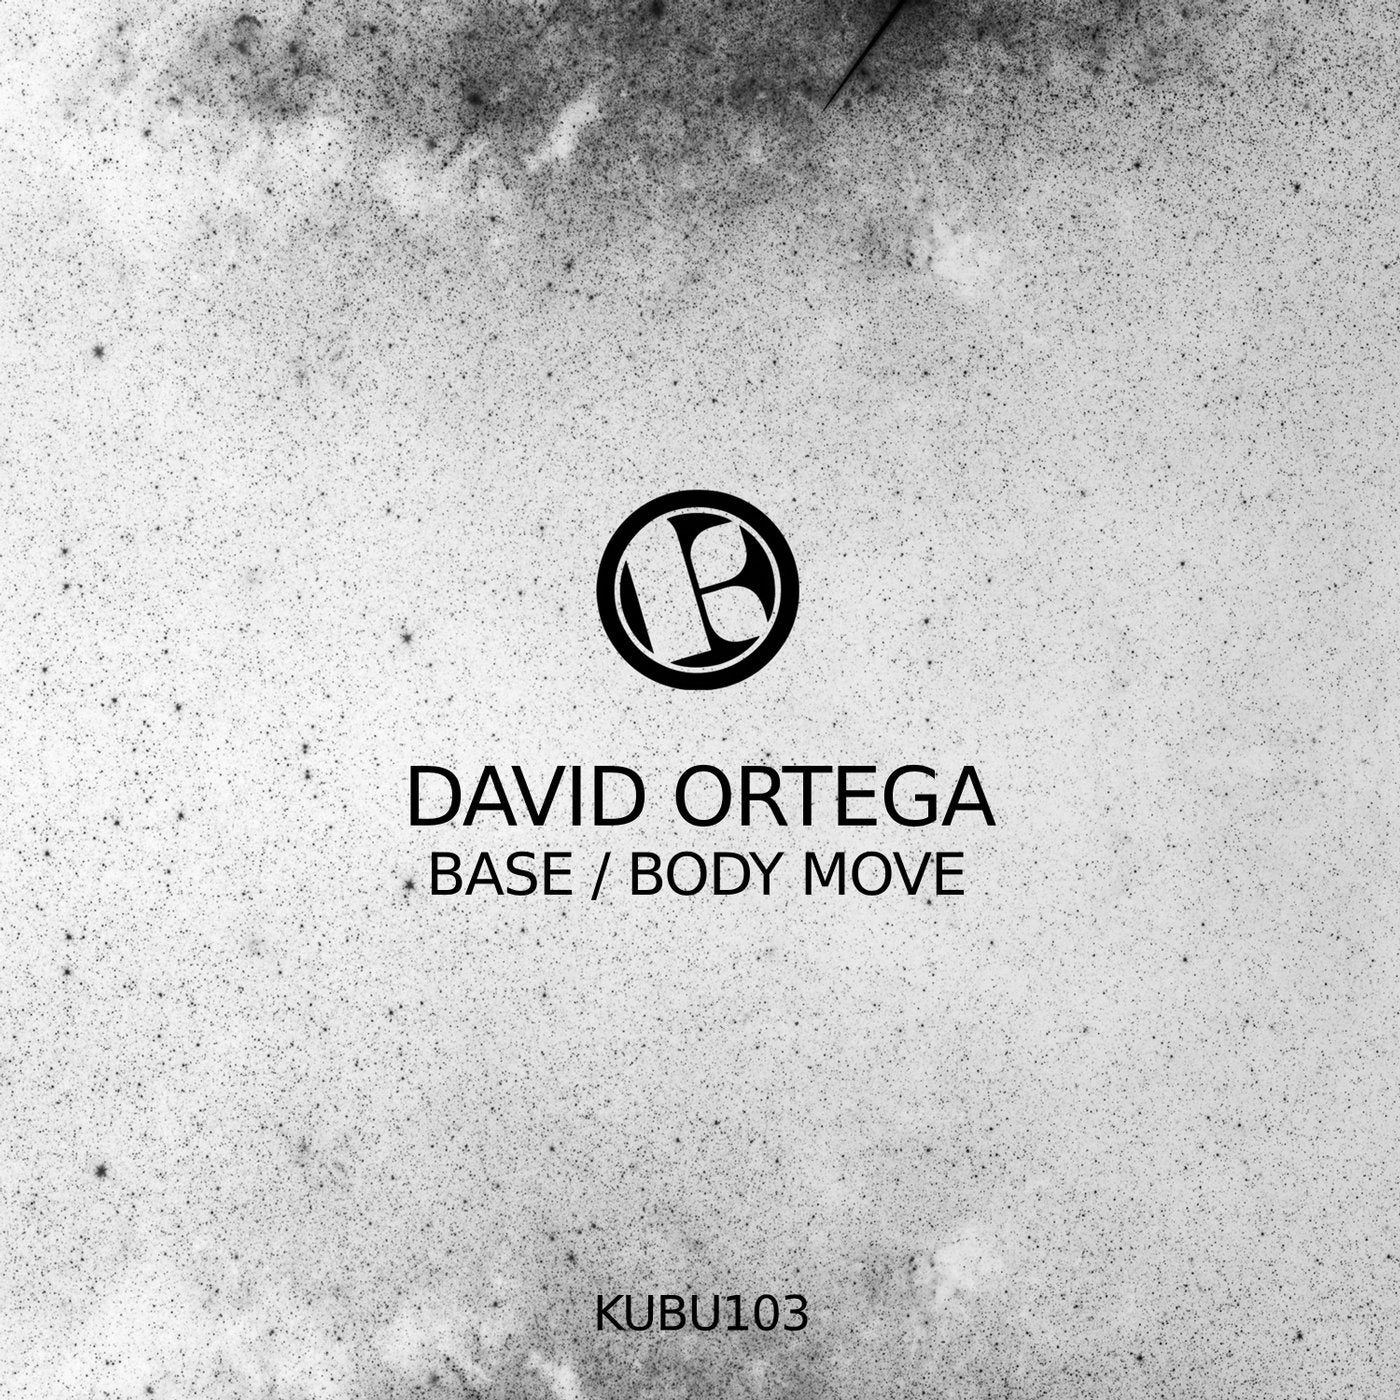 Base / Body Move